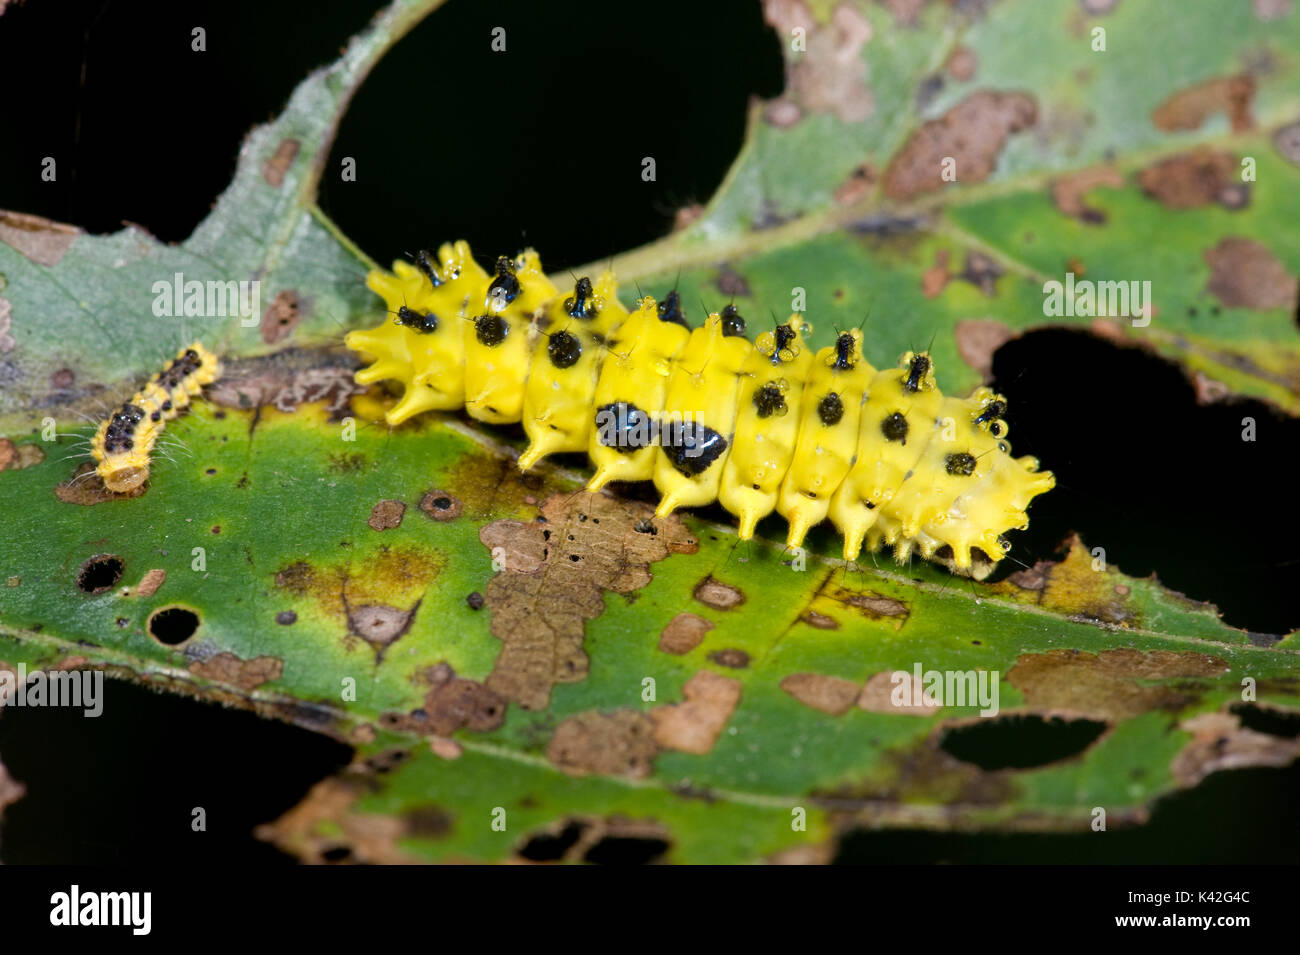 Unidentified Yellow Caterpillar, Possibly Slug Caterpillar, India Stock Photo